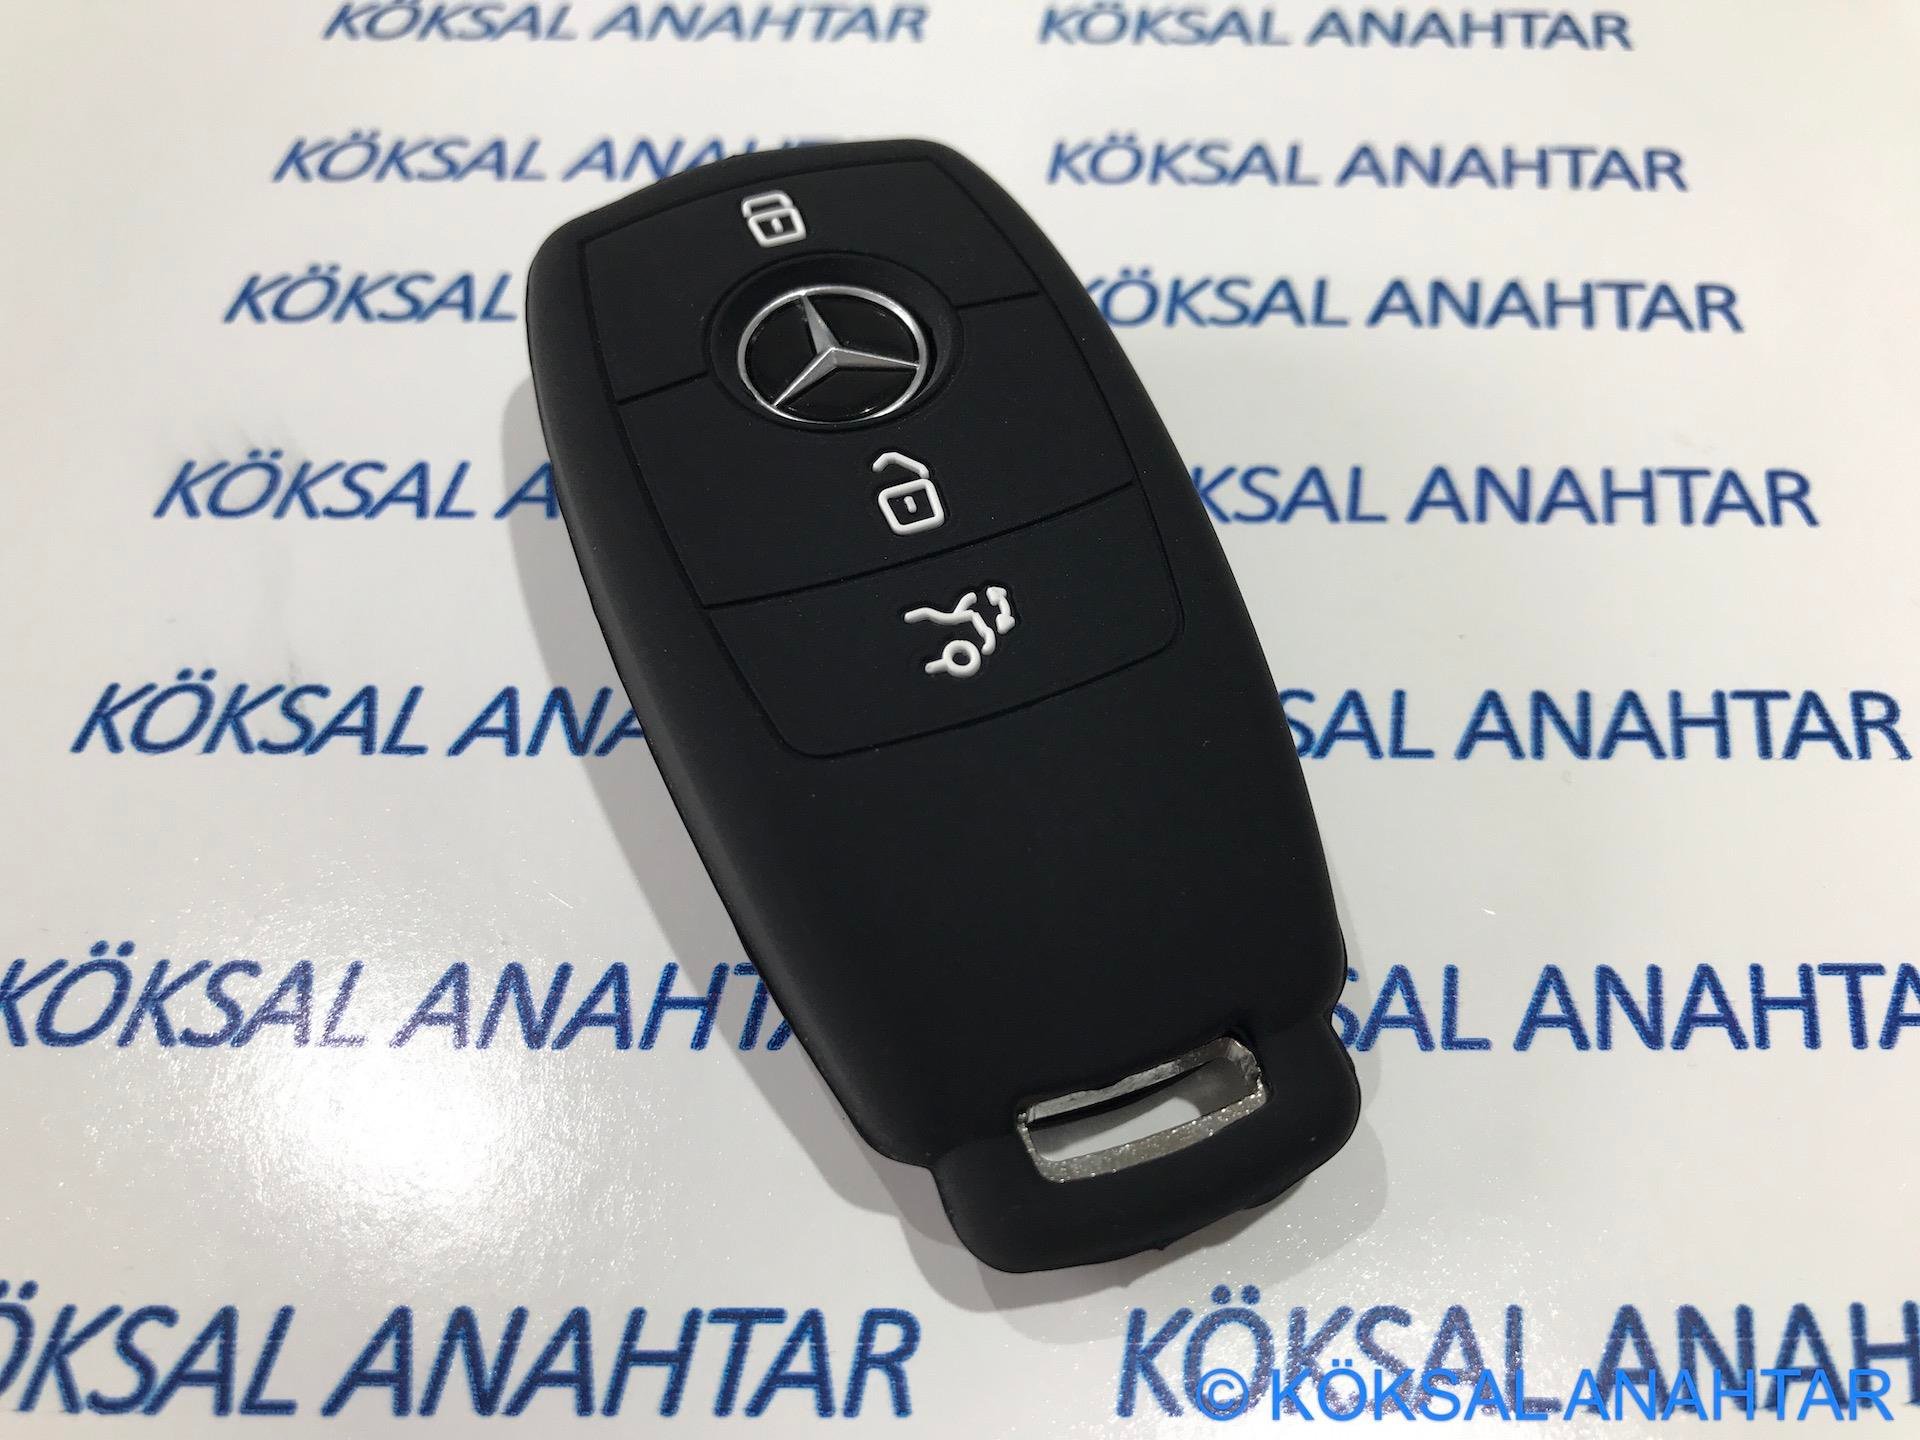 Mercedes-Benz Smart Anahtar Silikon Anahtar Kılıfı Black | Köksal Anahtar